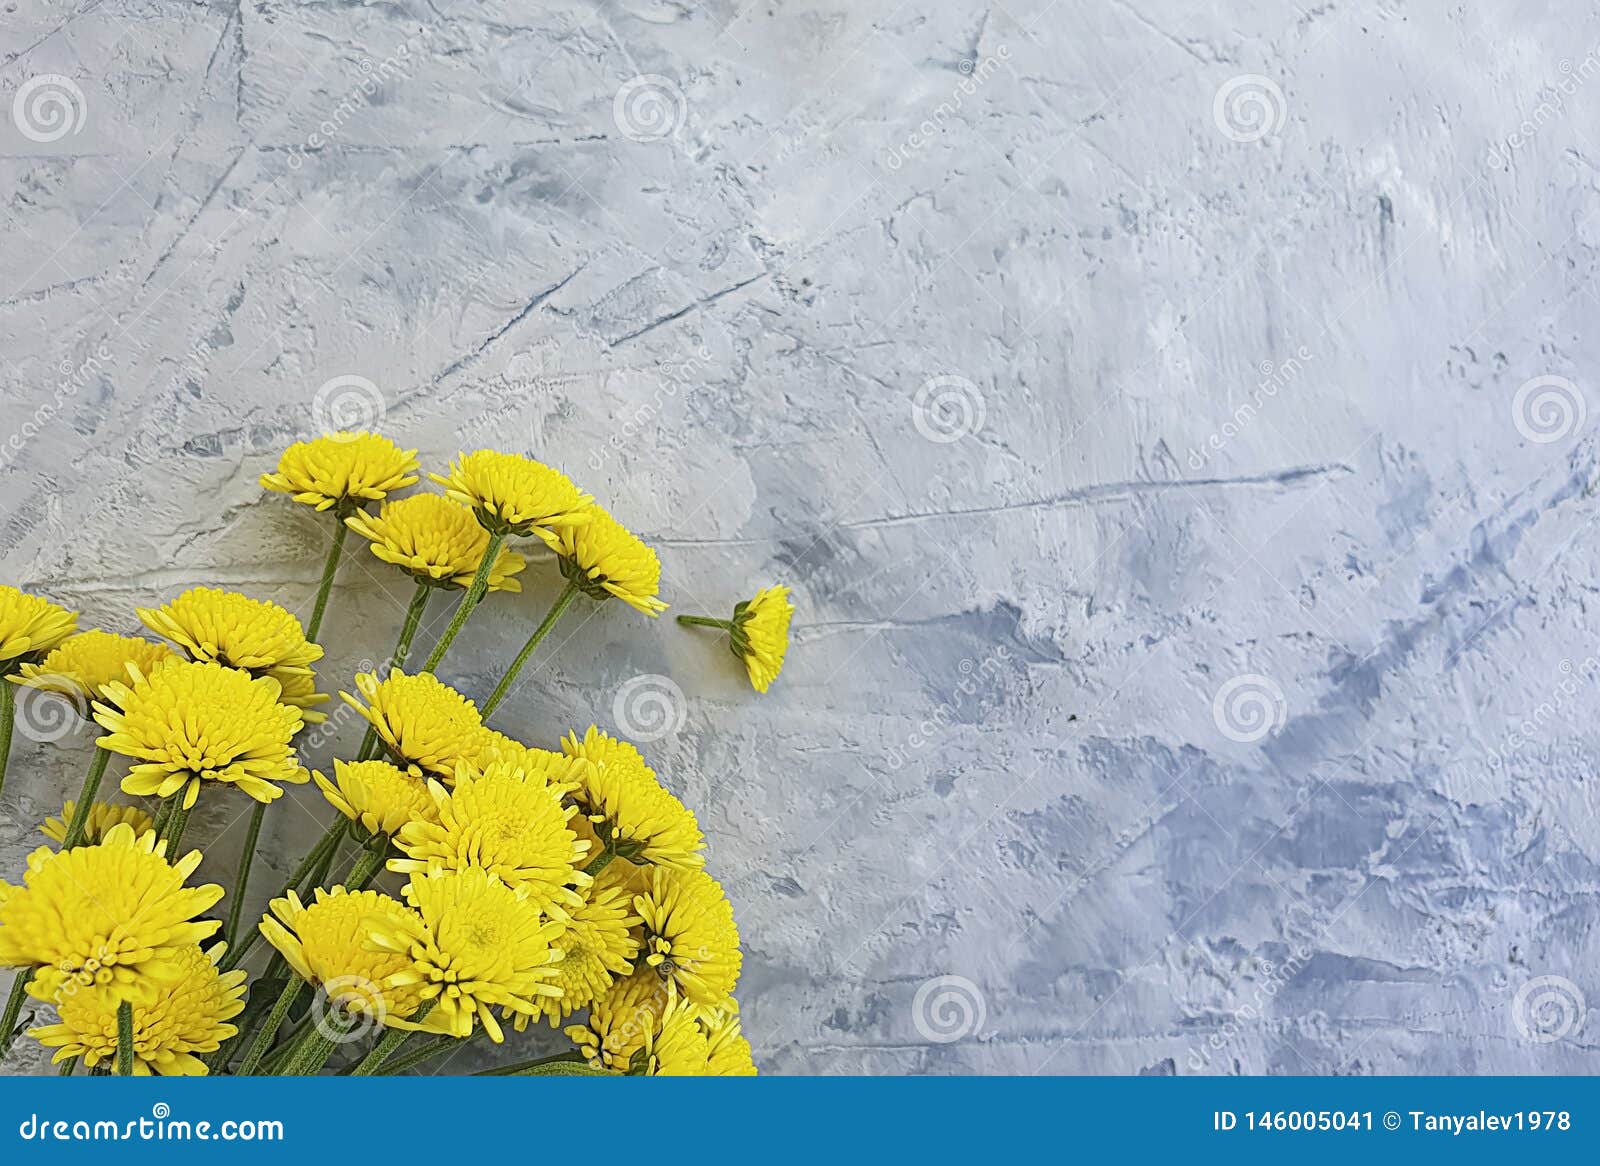 yellow chrysanthemum blossom flower borde holiday anniversary beauty on concrete background frame